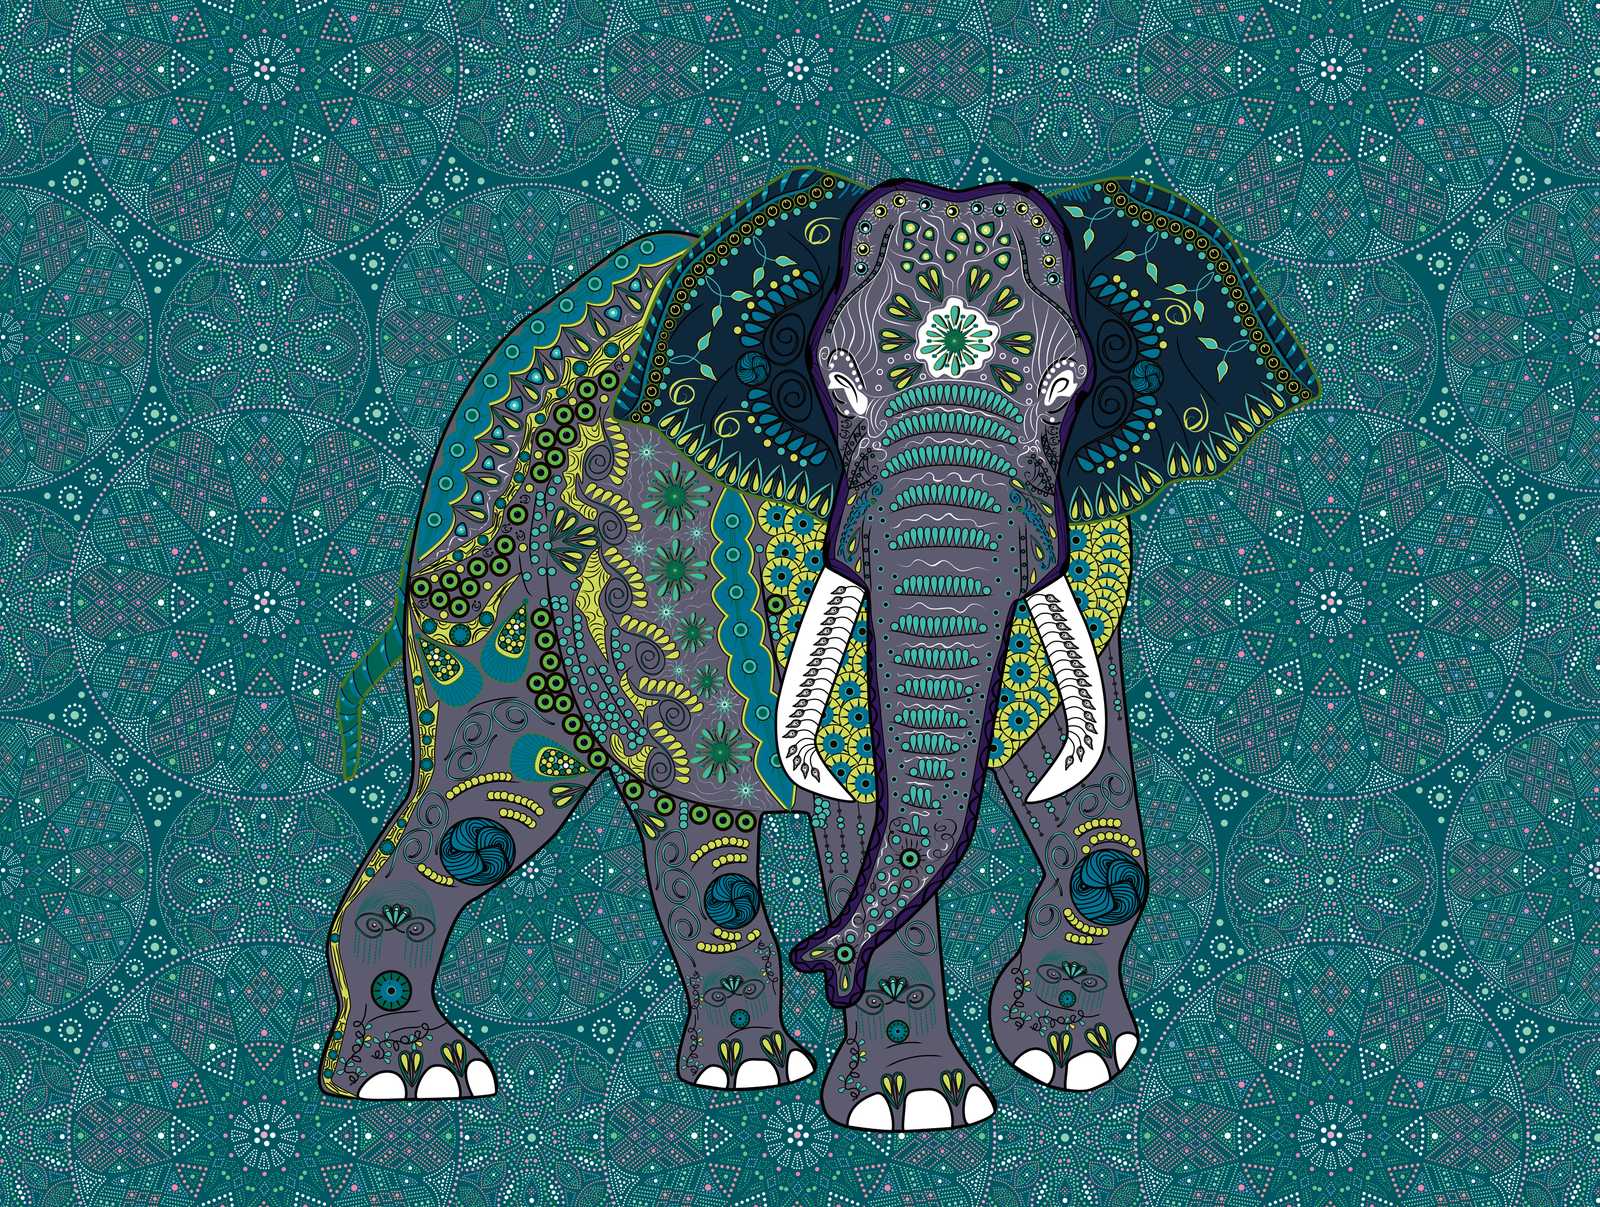             Wallpaper novelty | elephant wallpaper mandala motif in Indian style
        